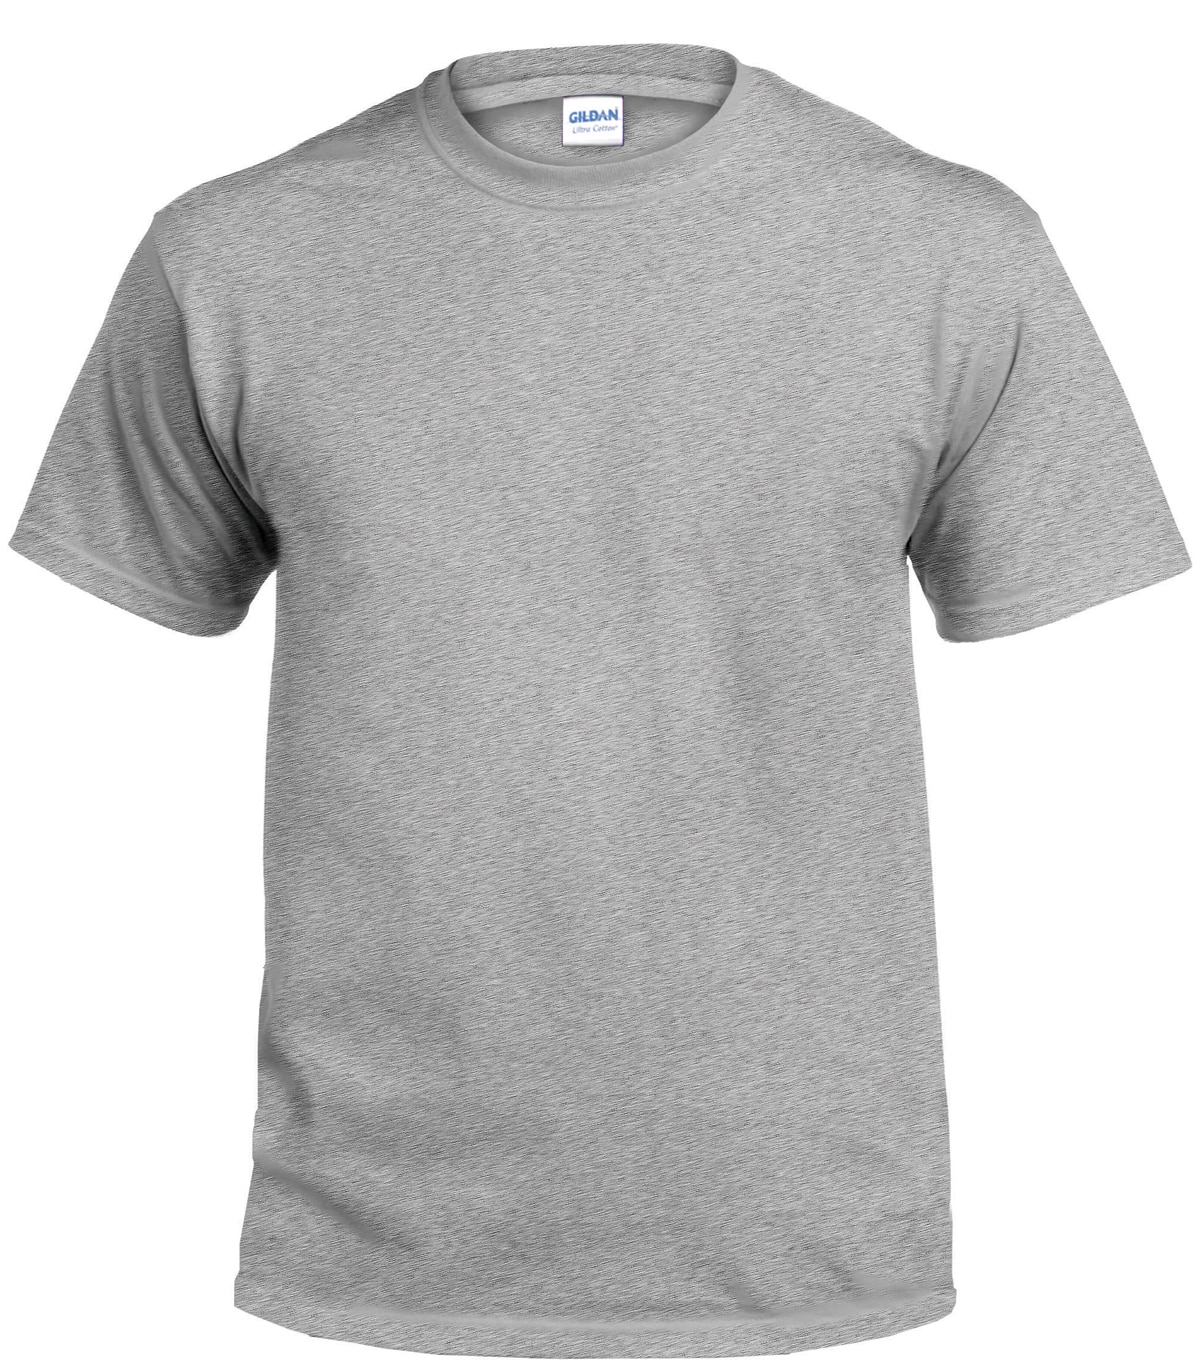 Download Gildan Adult T-shirt Medium | JOANN